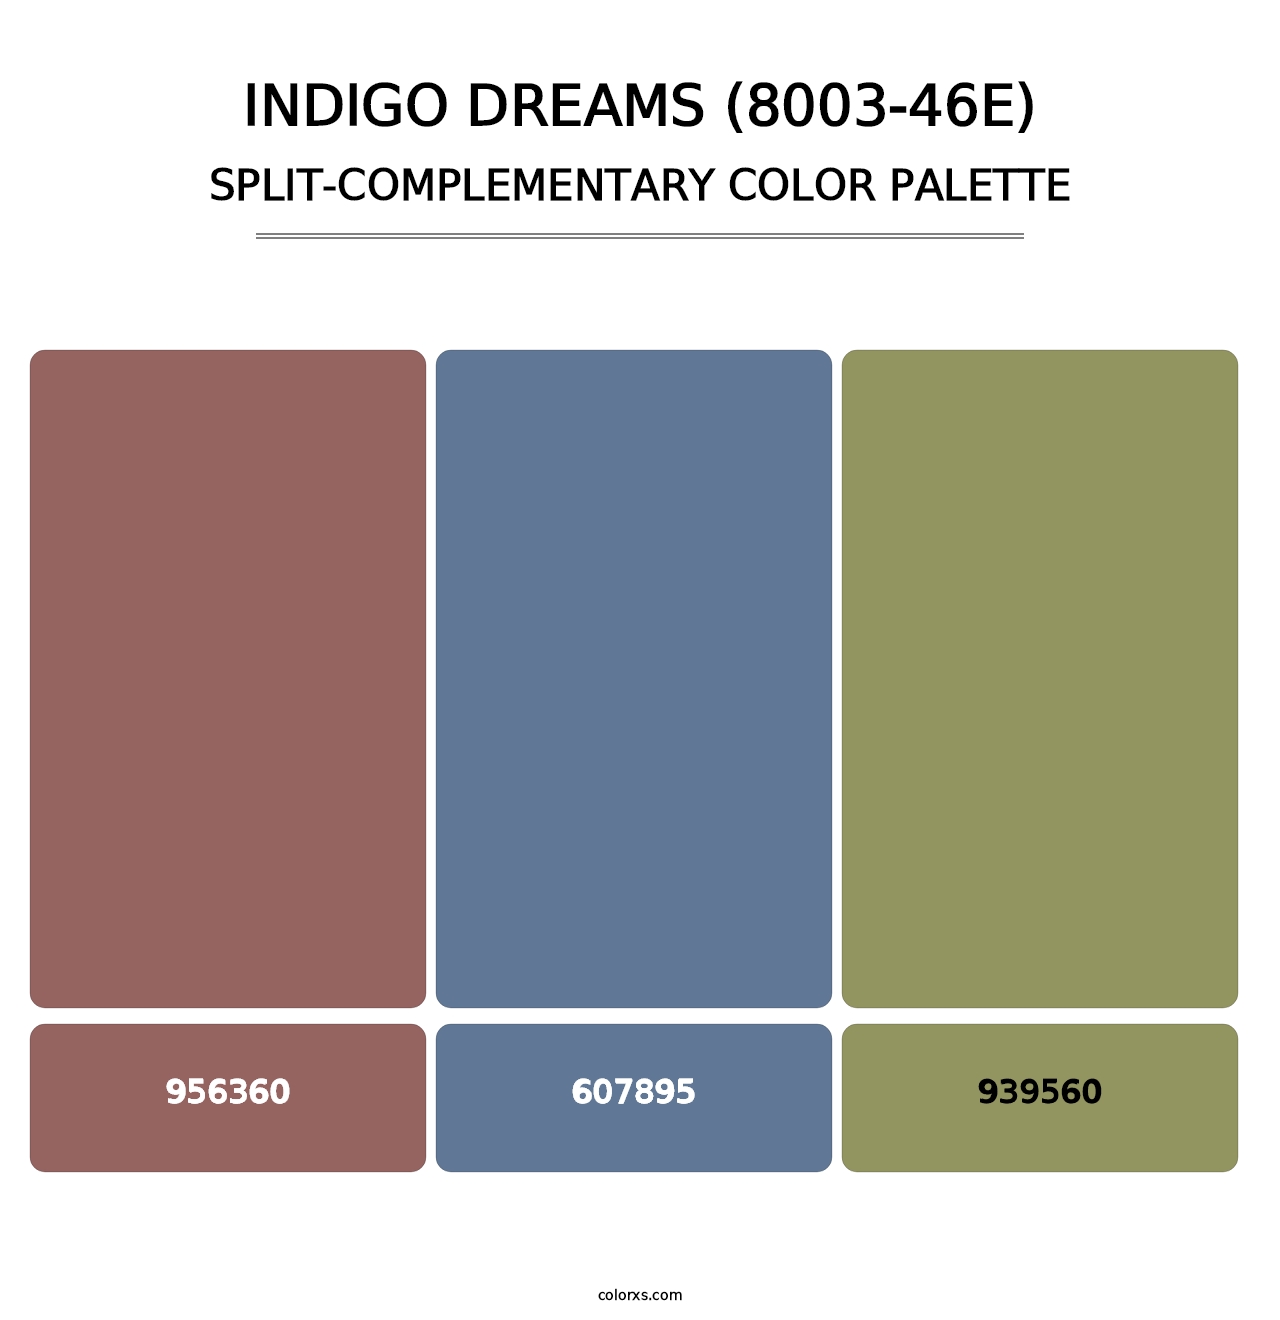 Indigo Dreams (8003-46E) - Split-Complementary Color Palette